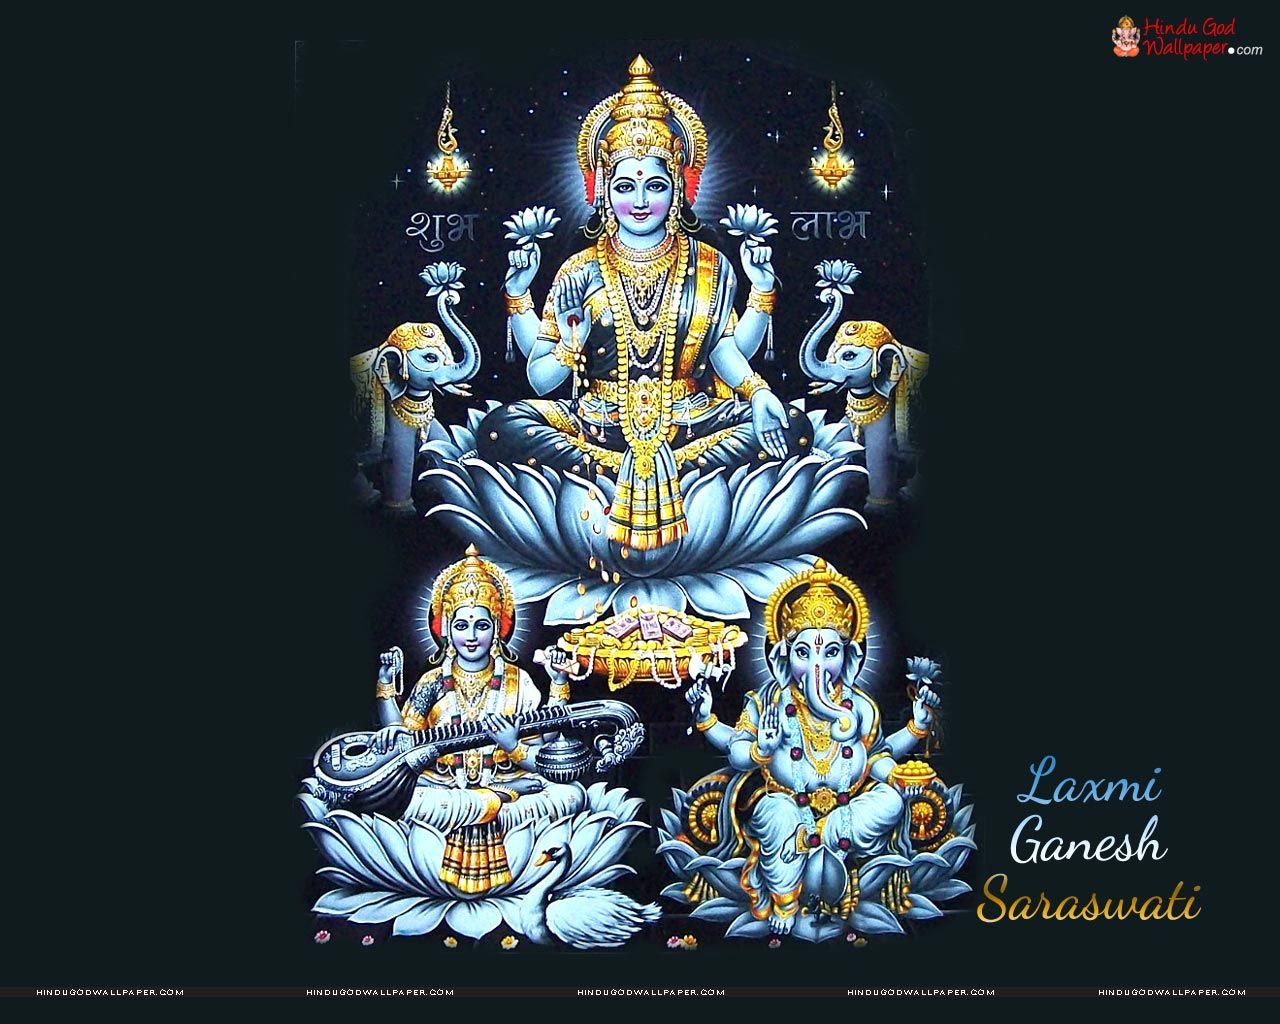 Laxmi Ganesh Saraswati HD Wallpaper Free Download. Wallpaper free download, Ganesh wallpaper, Wallpaper